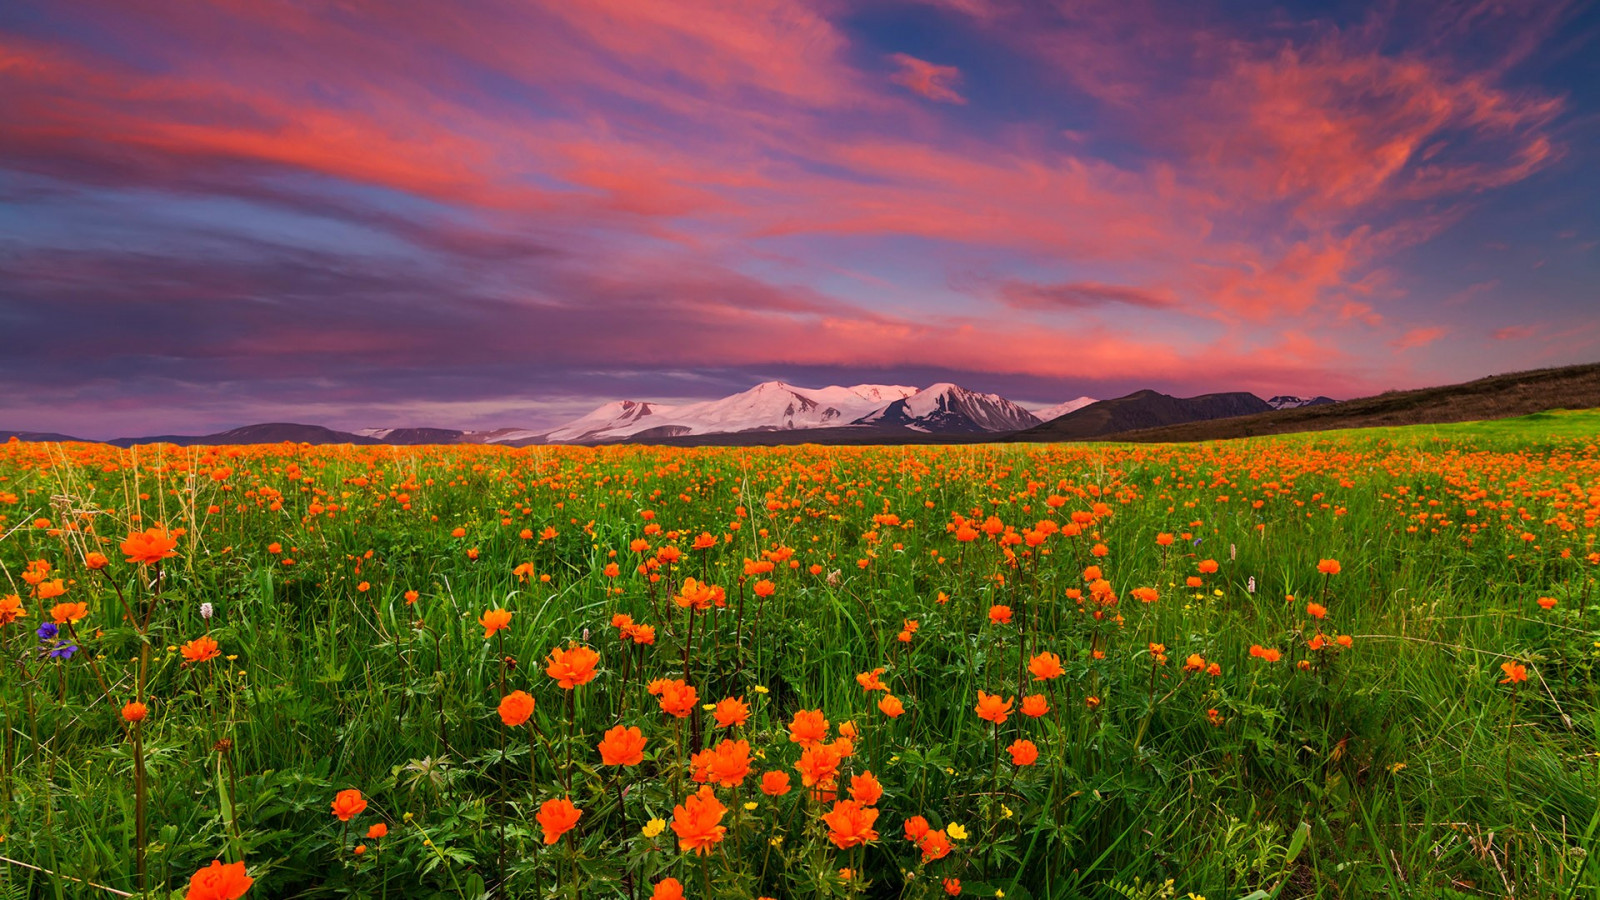 Wallpaper, nature, landscape, clouds, sky, field, orange flowers, plants, sunset, mountains, snowy mountain, Russia, far view 1920x1080